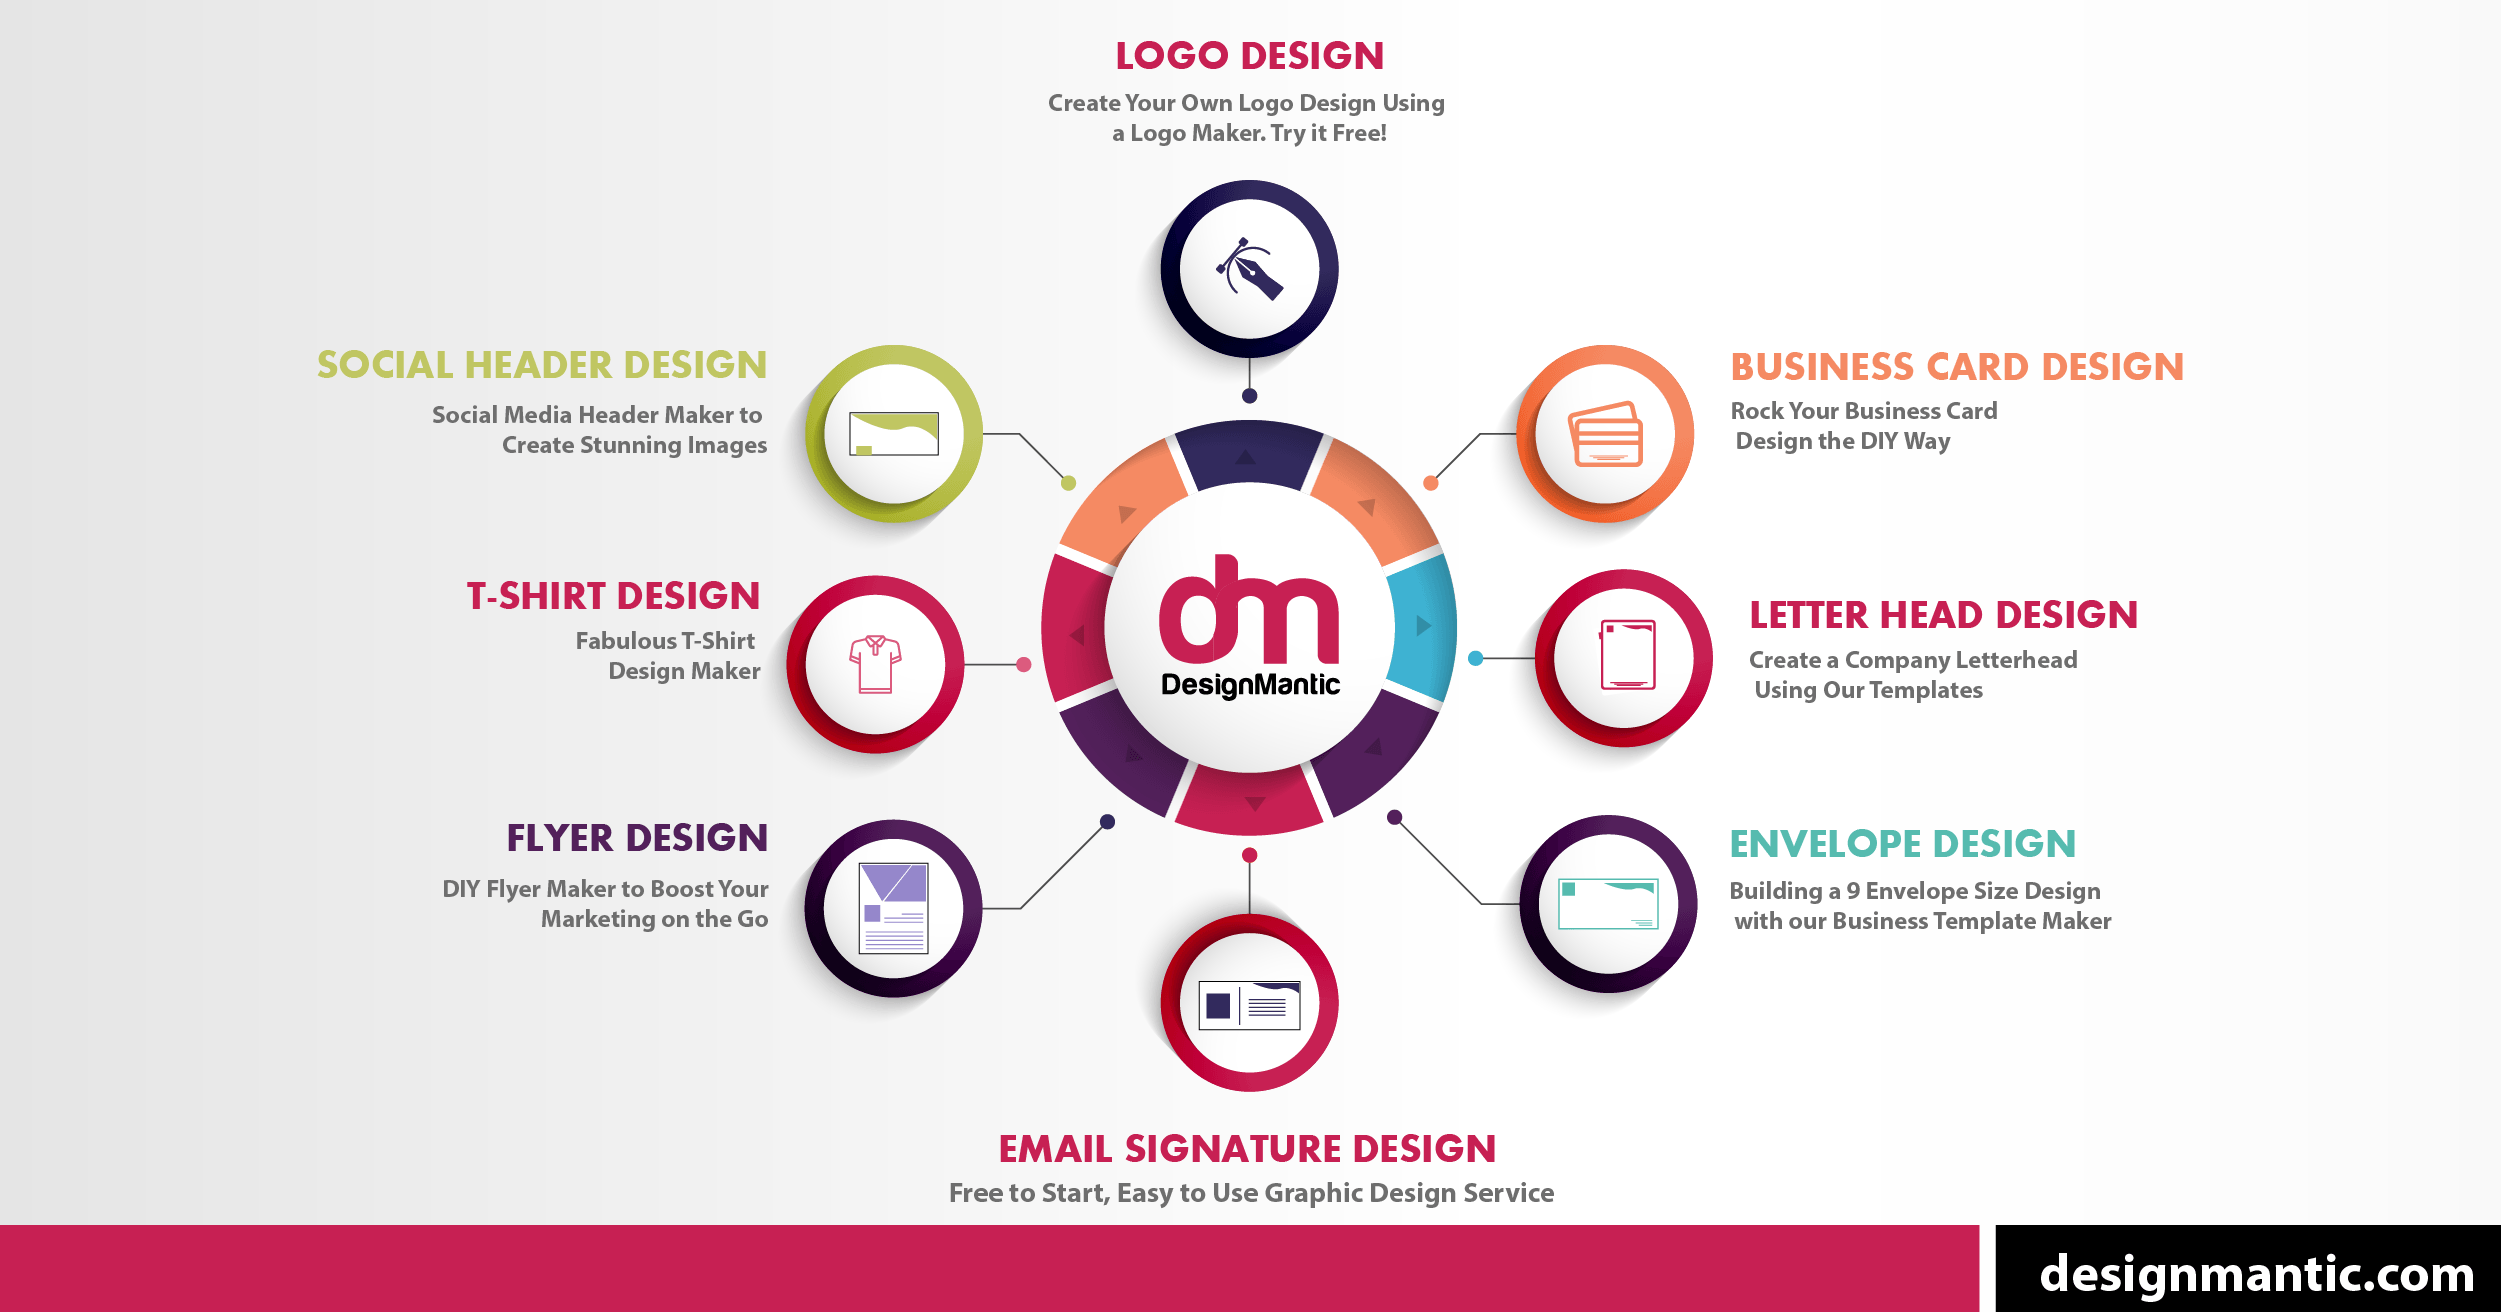 Graphic Logo - Graphic Design Software & Logo Tool | DesignMantic: The Design Shop